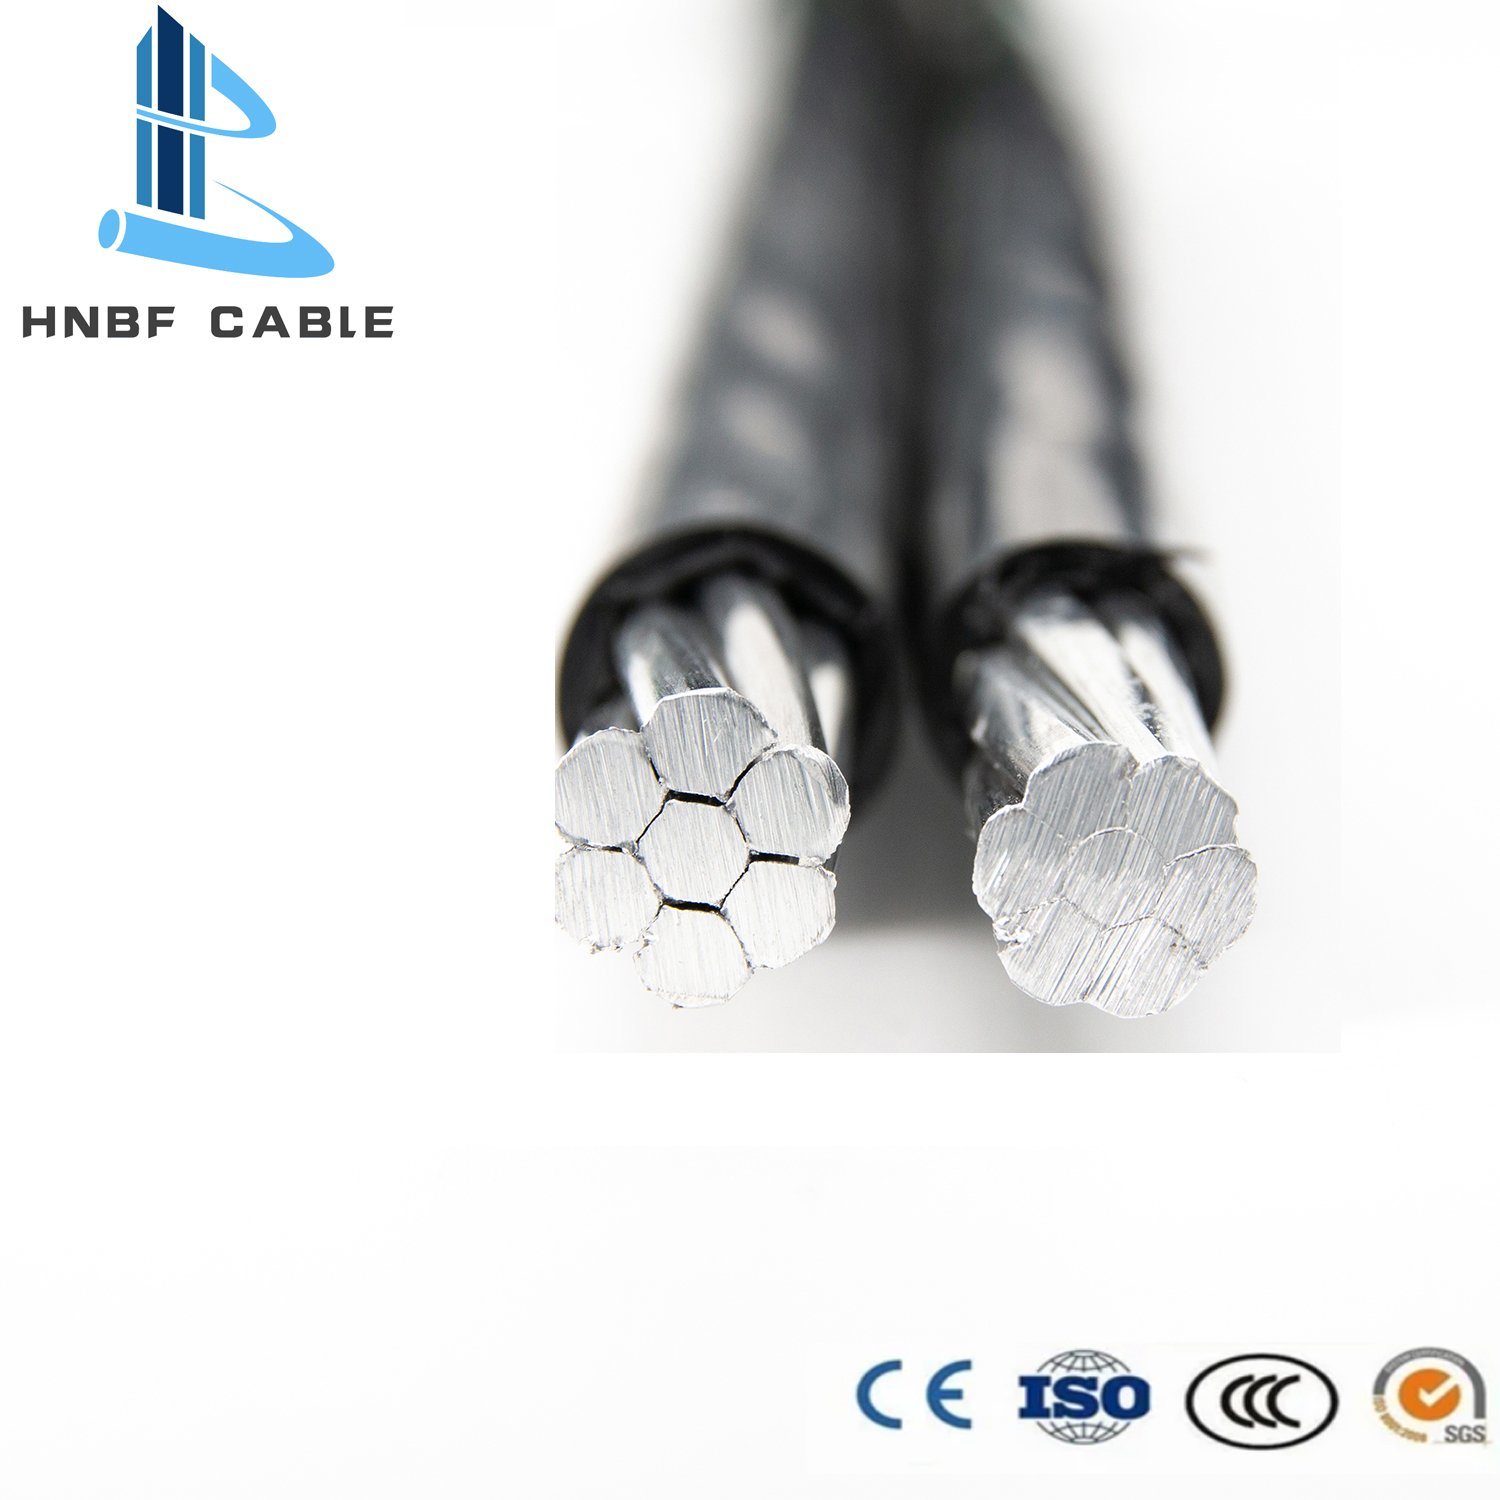 
                1*50+54,6 ABC Kabel Aluminium Leiter XLPE/PE/PVC isolierter Elektrodraht NFC Standard
            